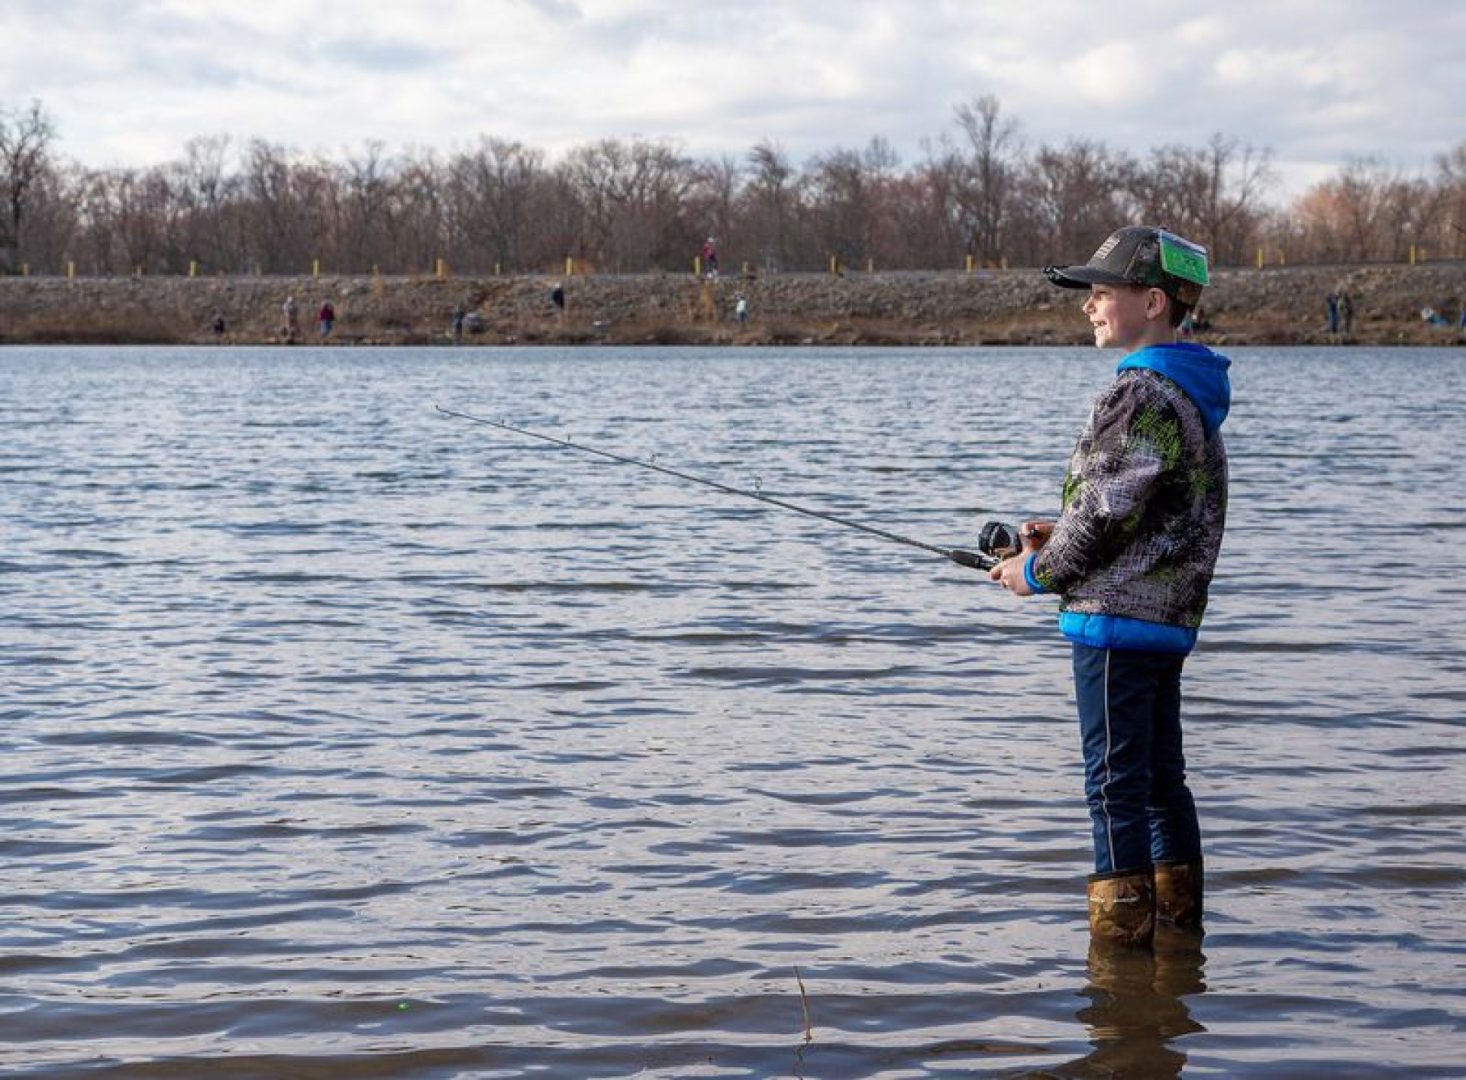 Pennsylvania trout fishing season opens Saturday: Here's